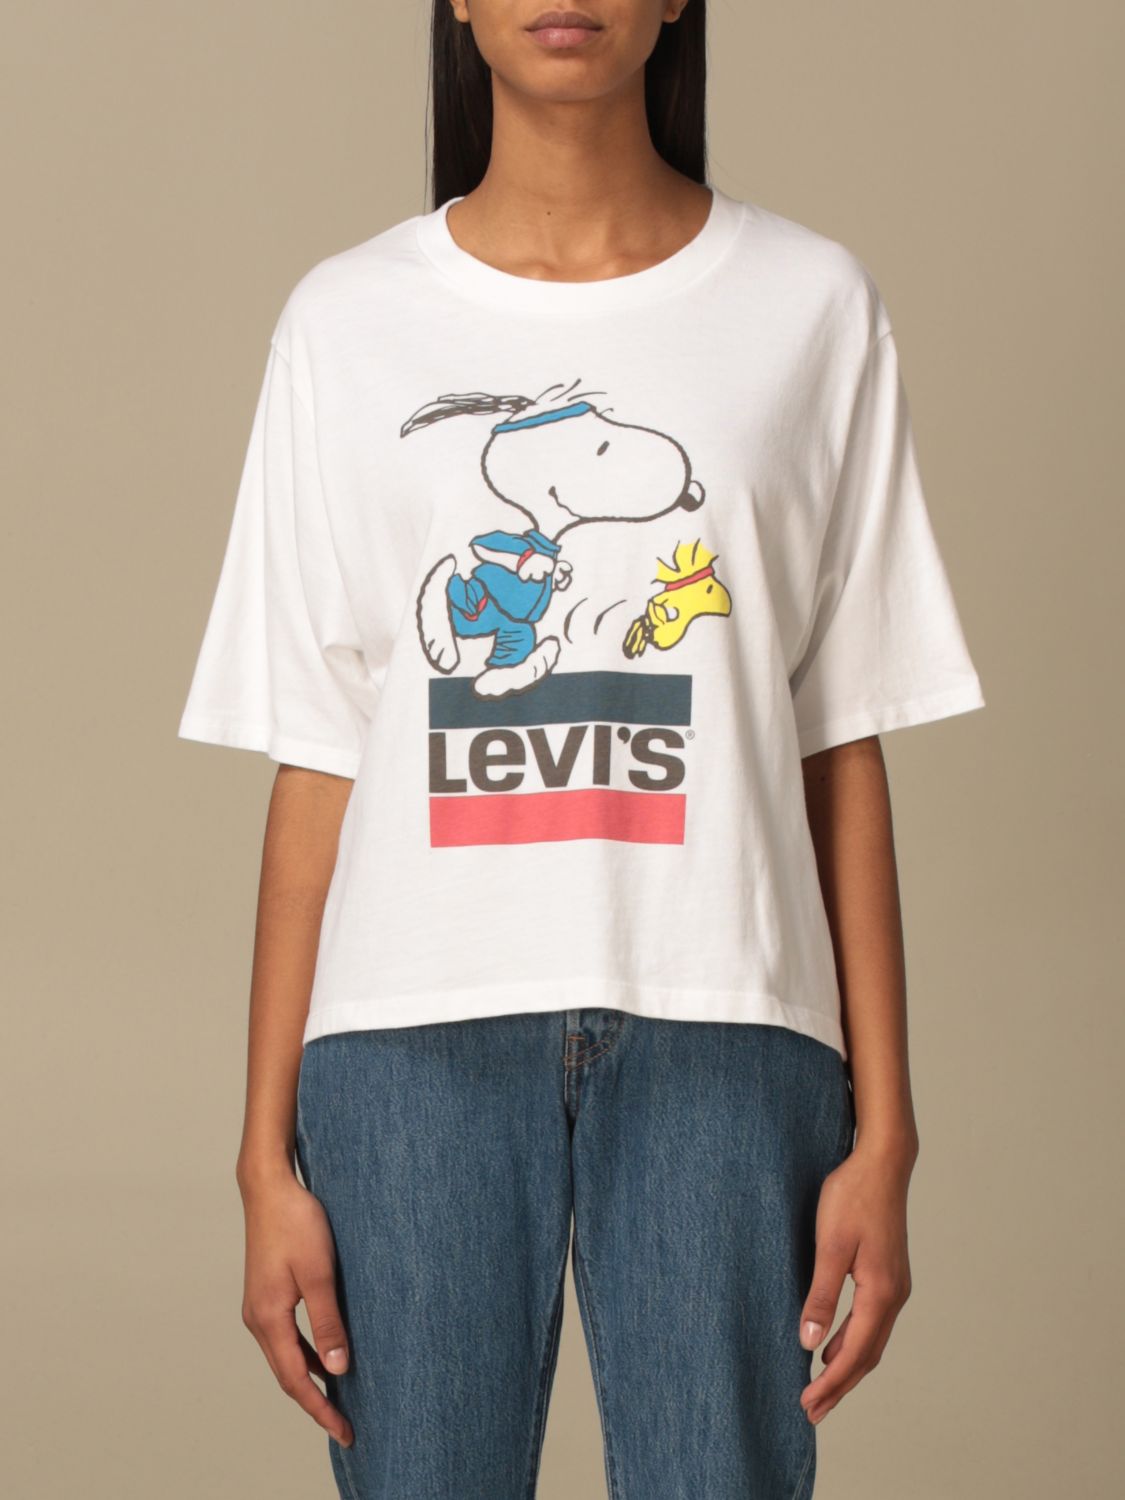 levis white printed t shirt